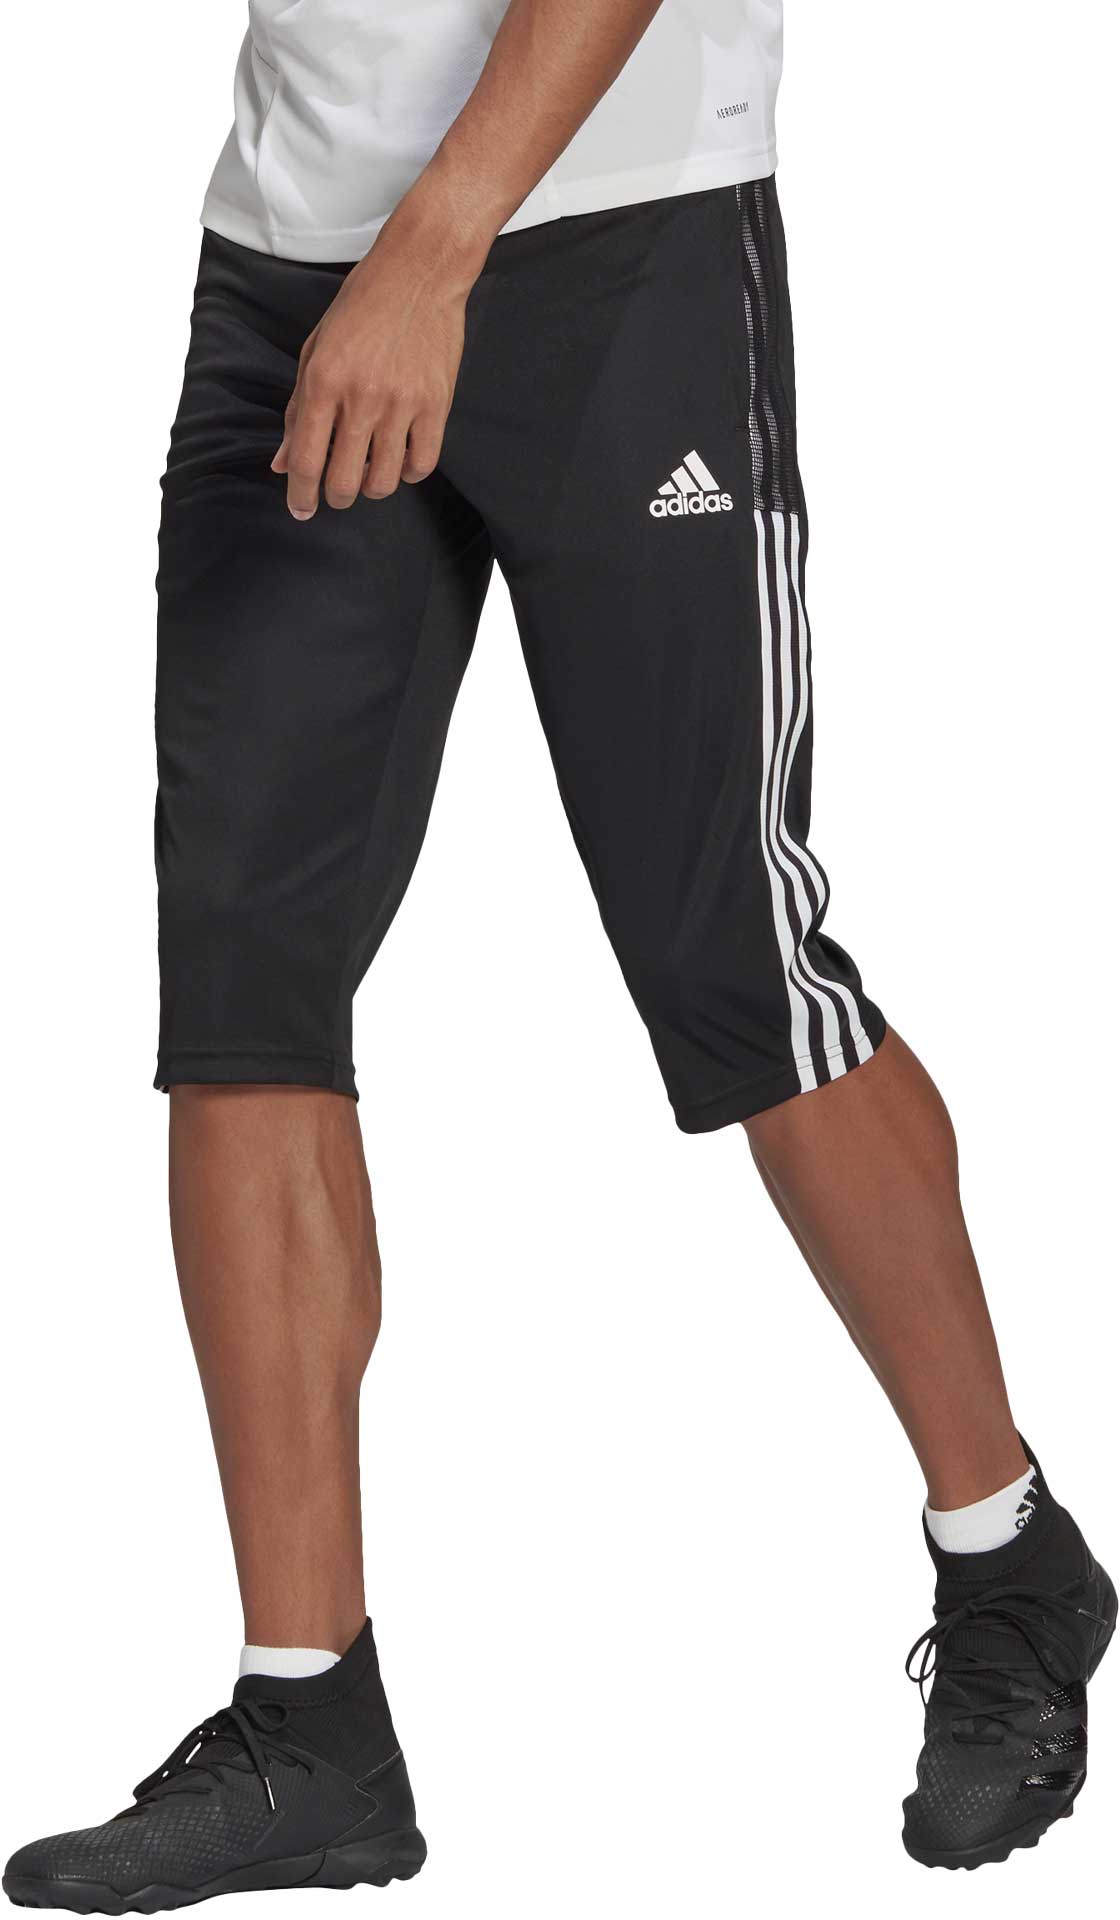 Férfi futball melegítőnadrág rövidített hosszal